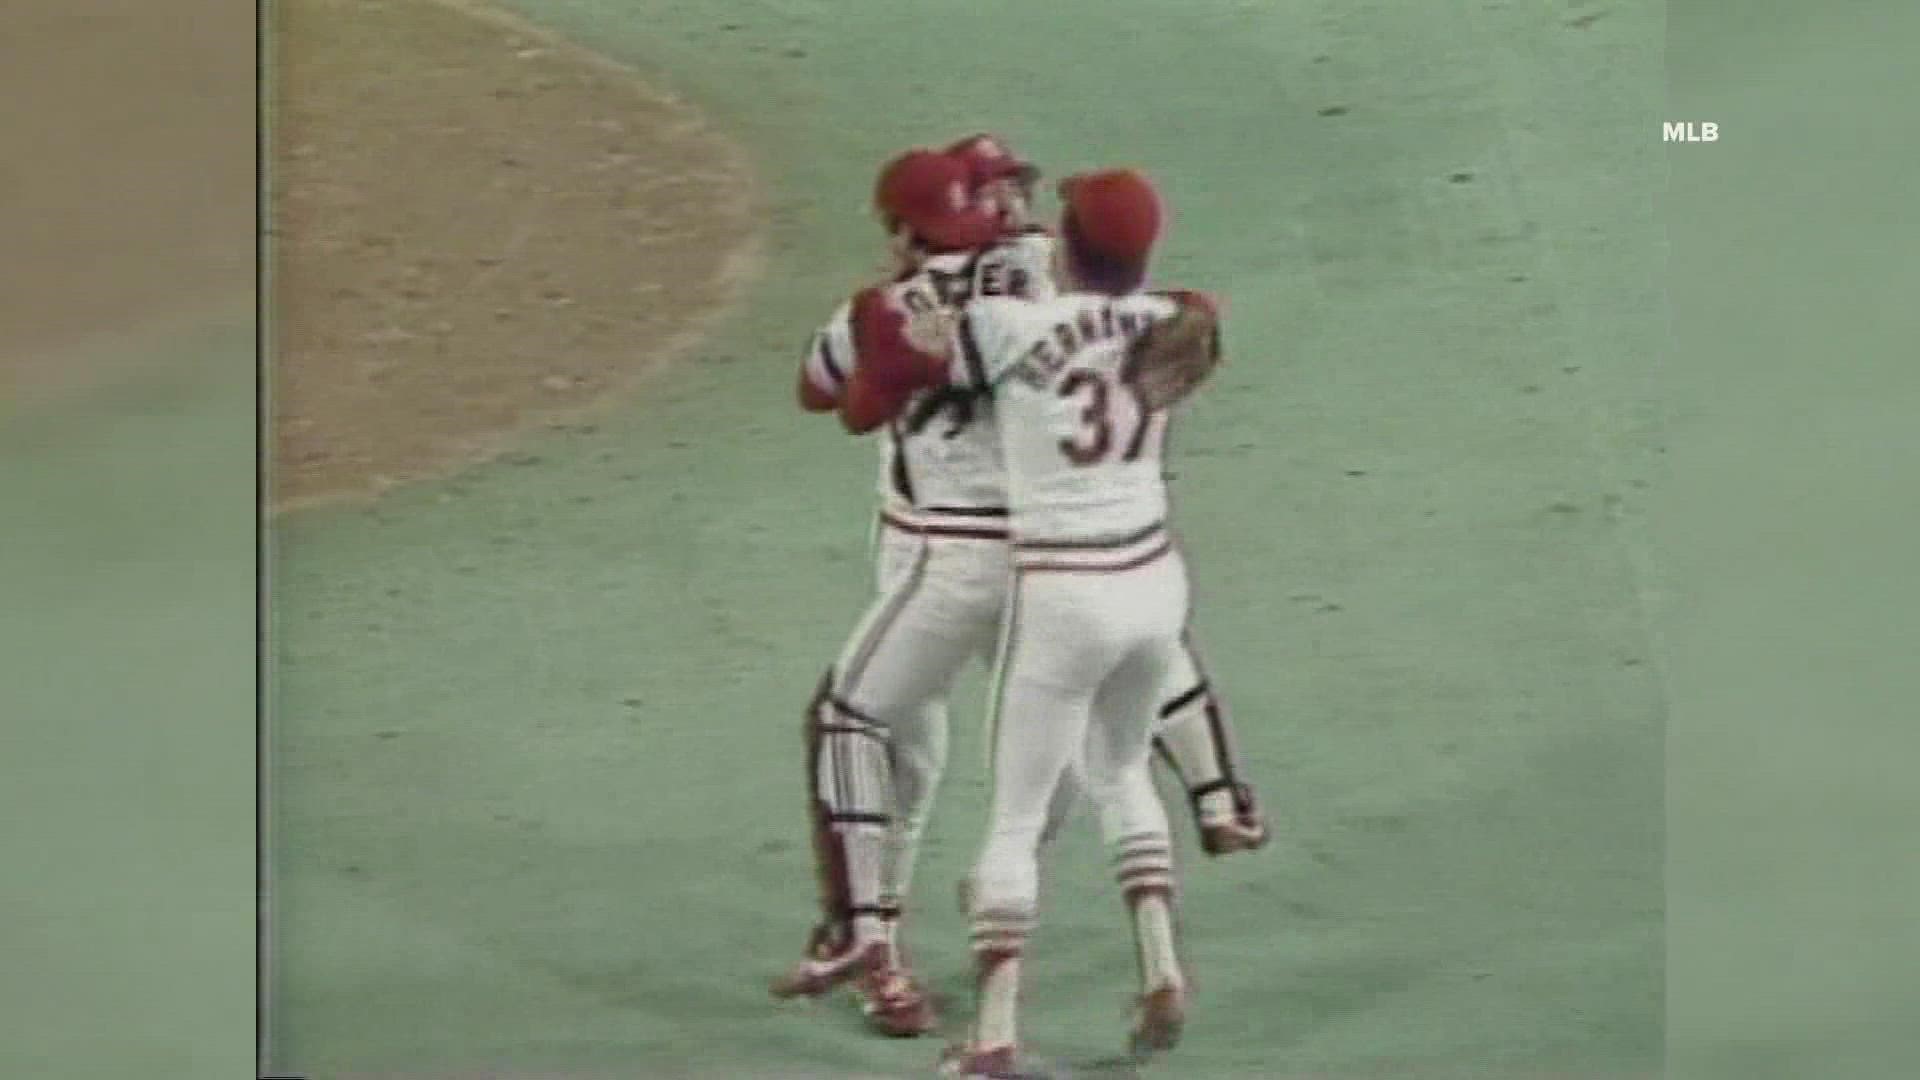 Cardinals honor 40th anniversary of 1982 World Series championship team